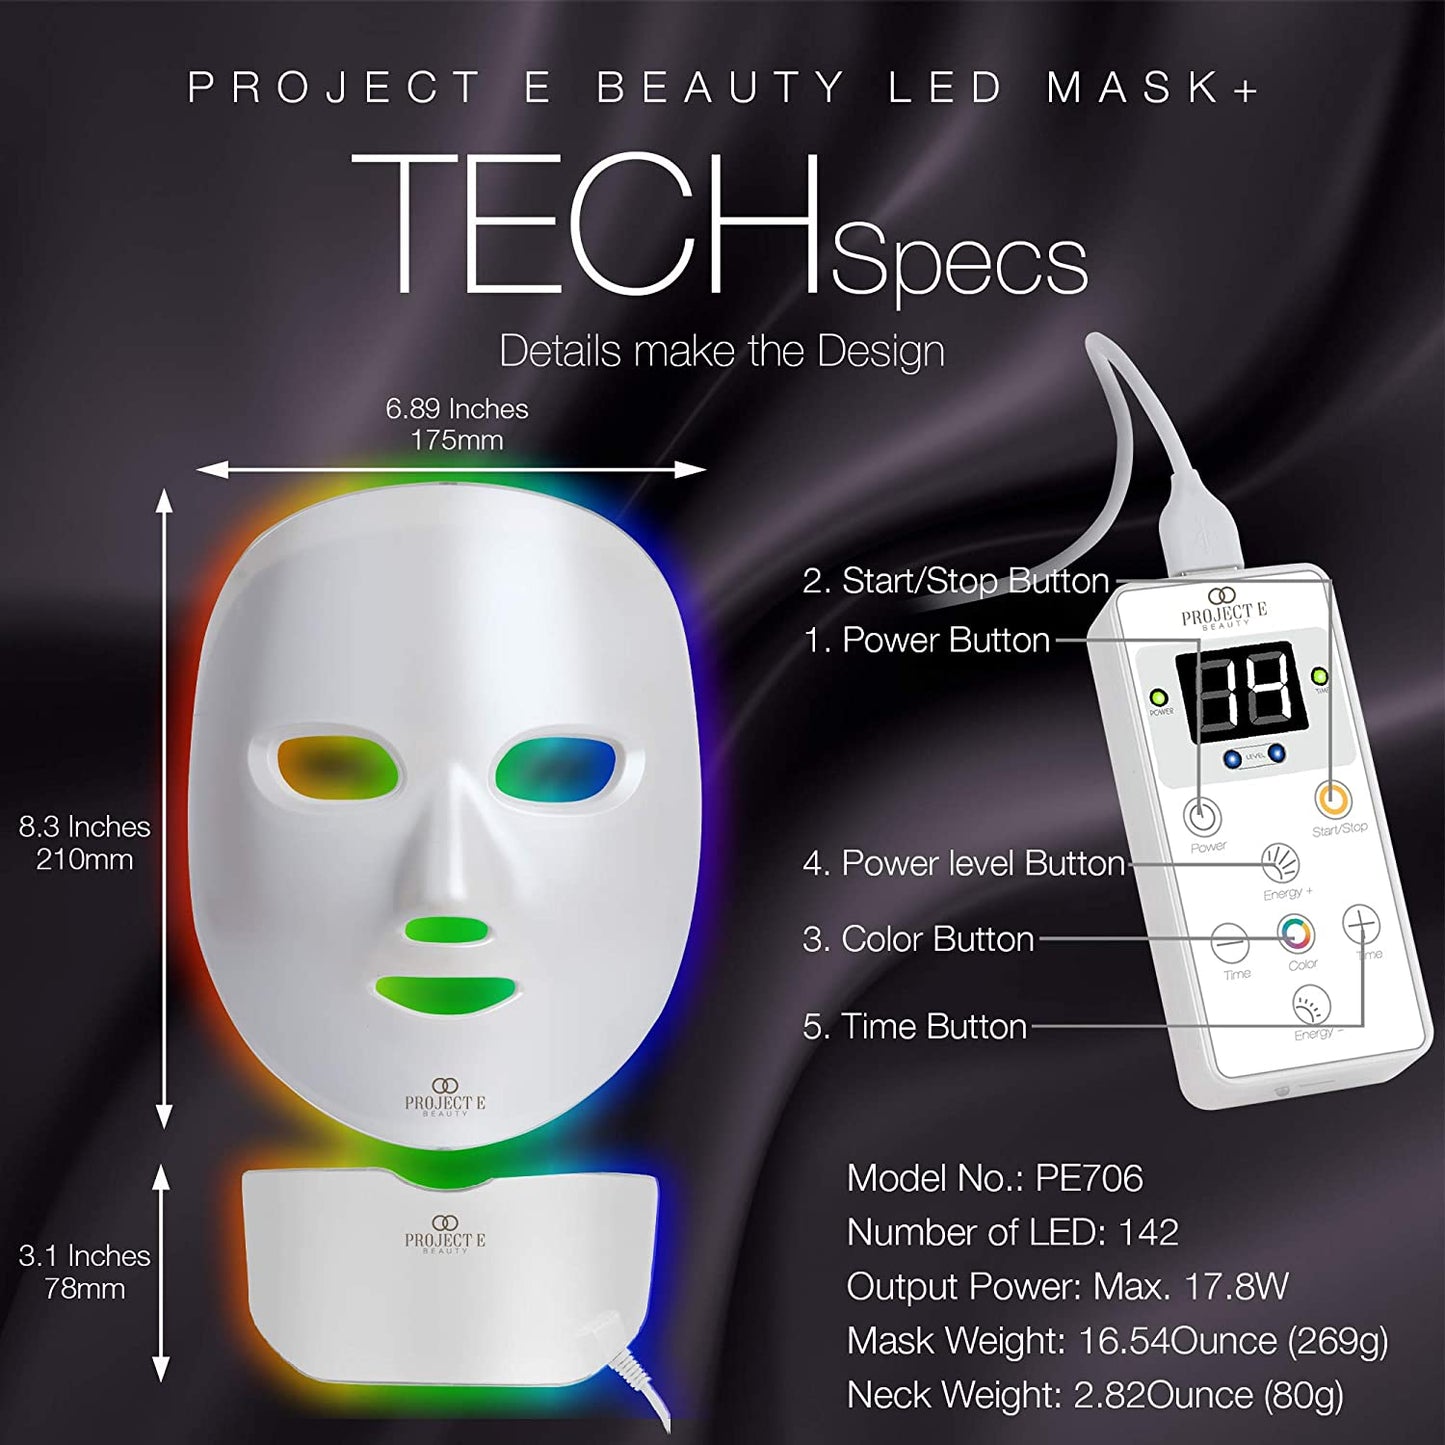 Project E Beauty LED Light Therapy Face & Neck Mask